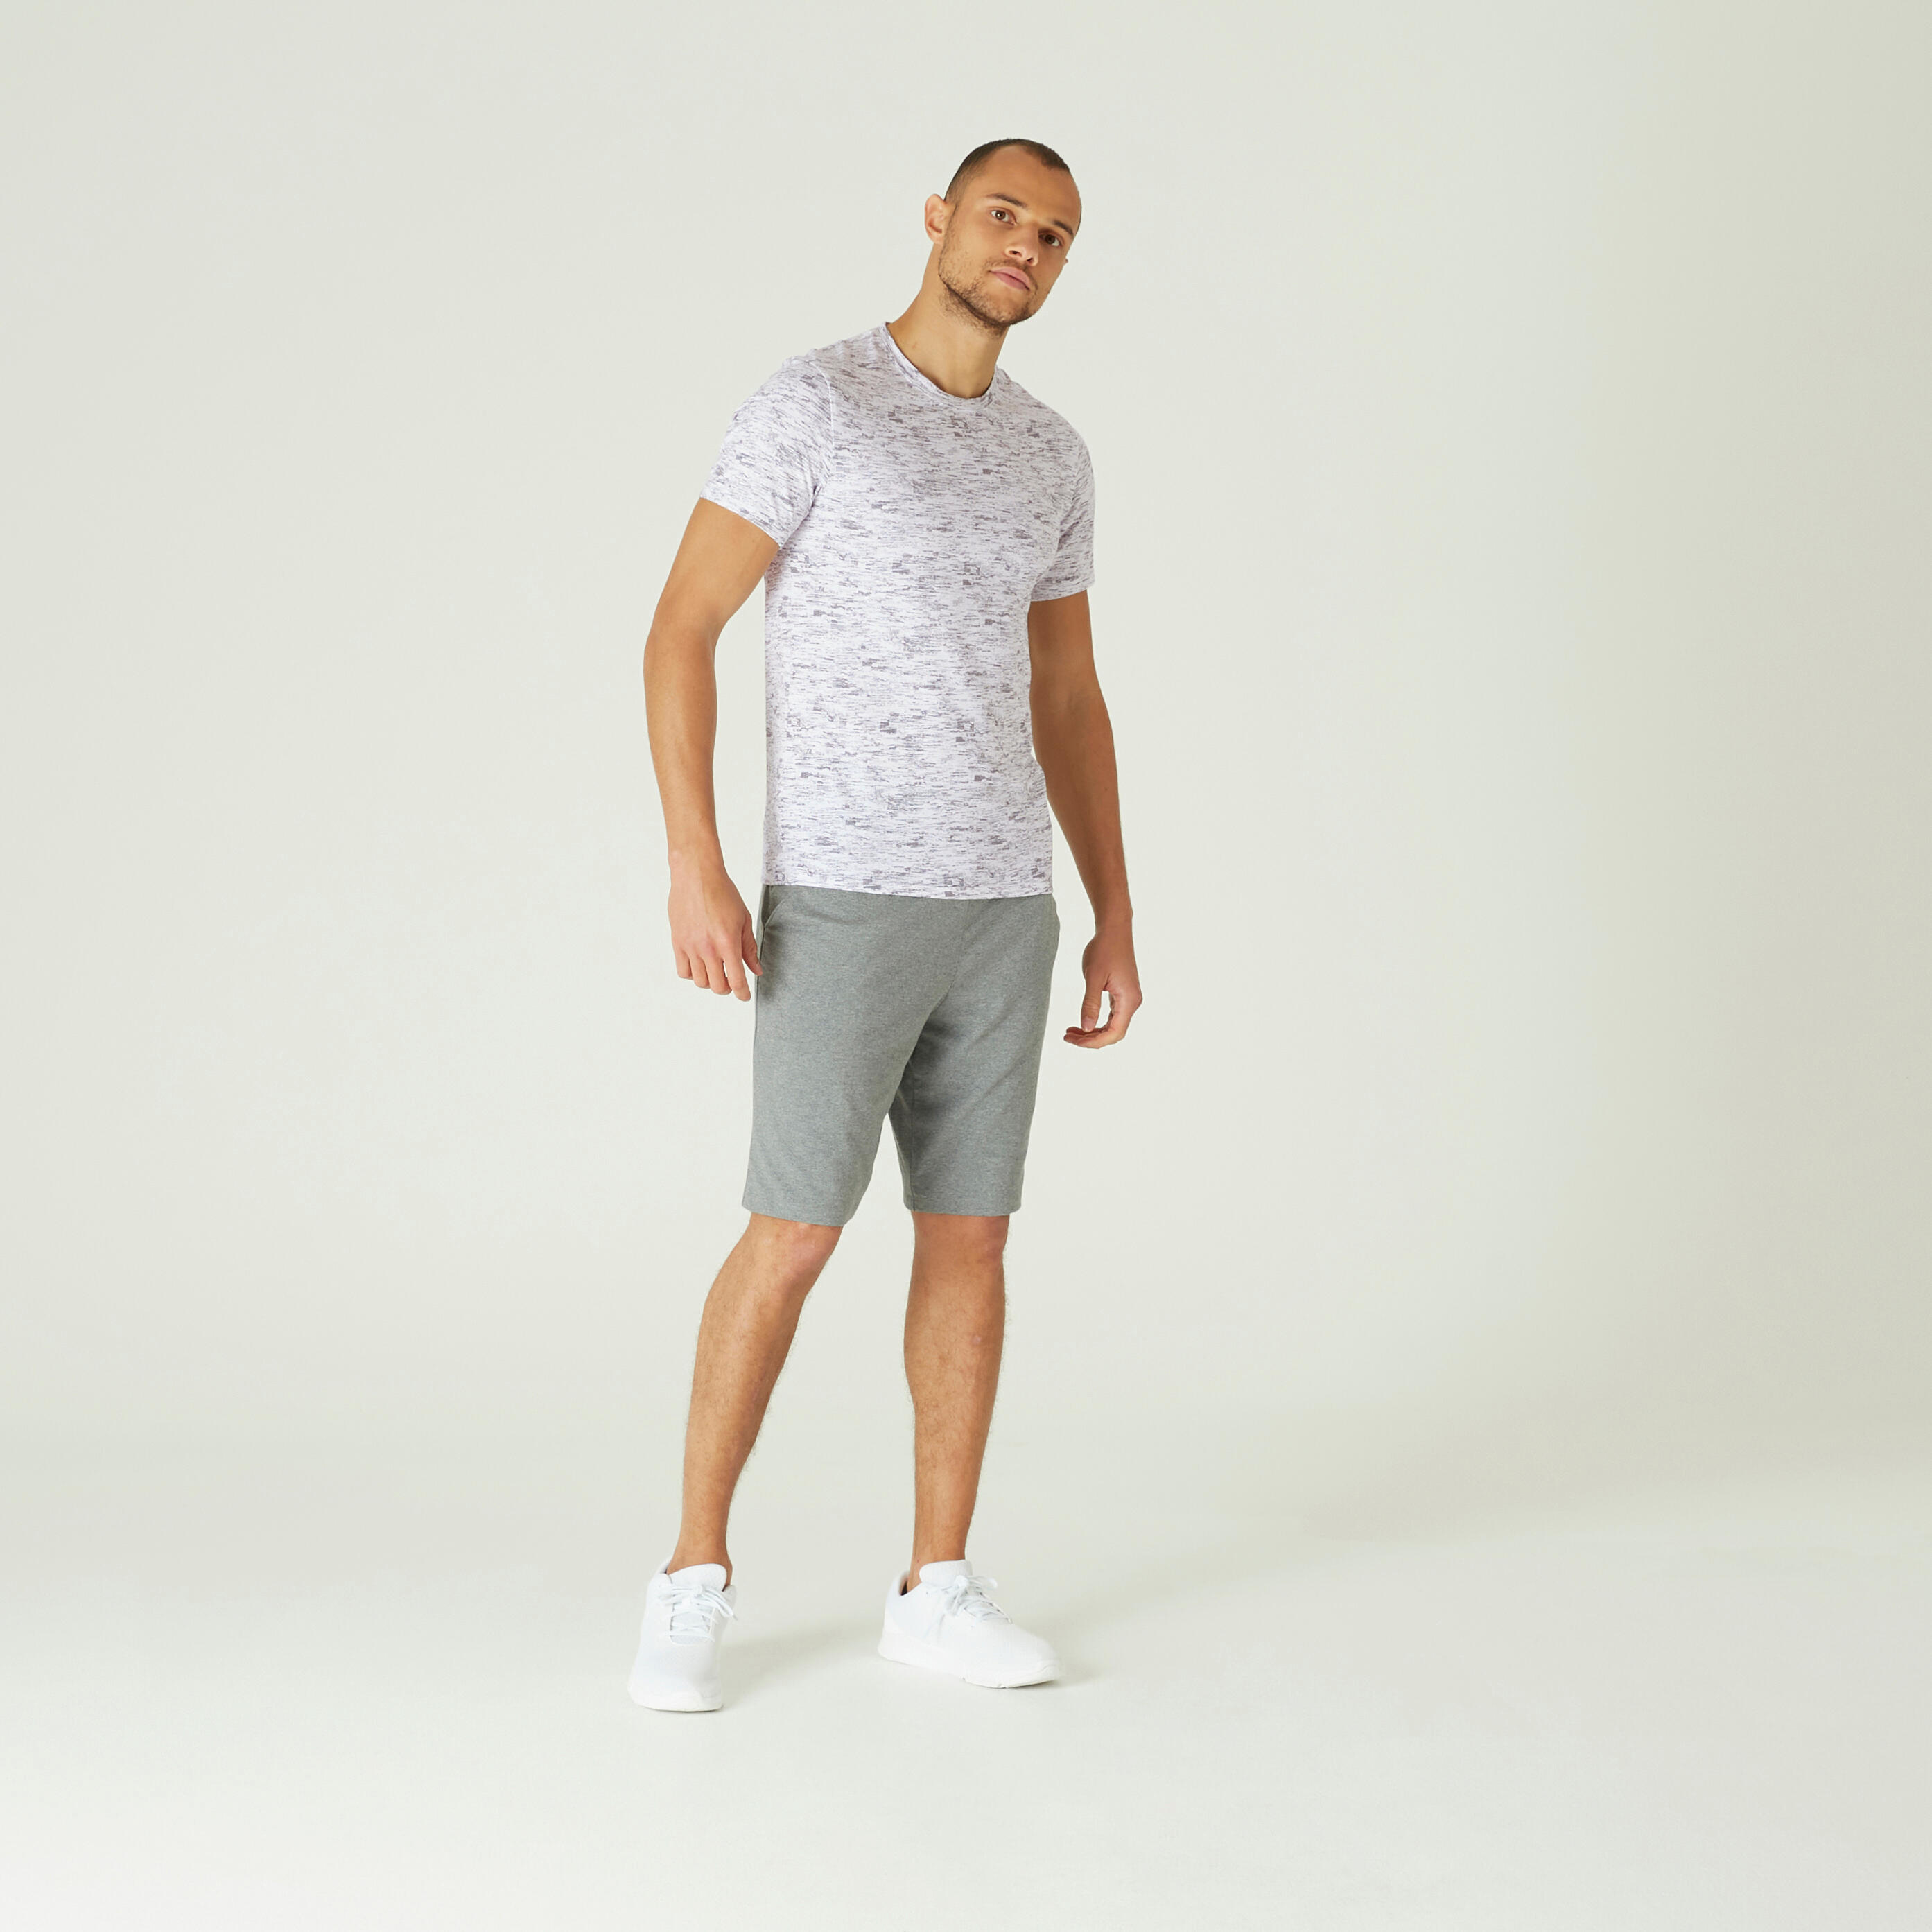 DOMYOS Men's Slim-Fit Fitness T-Shirt 500 - Ice White